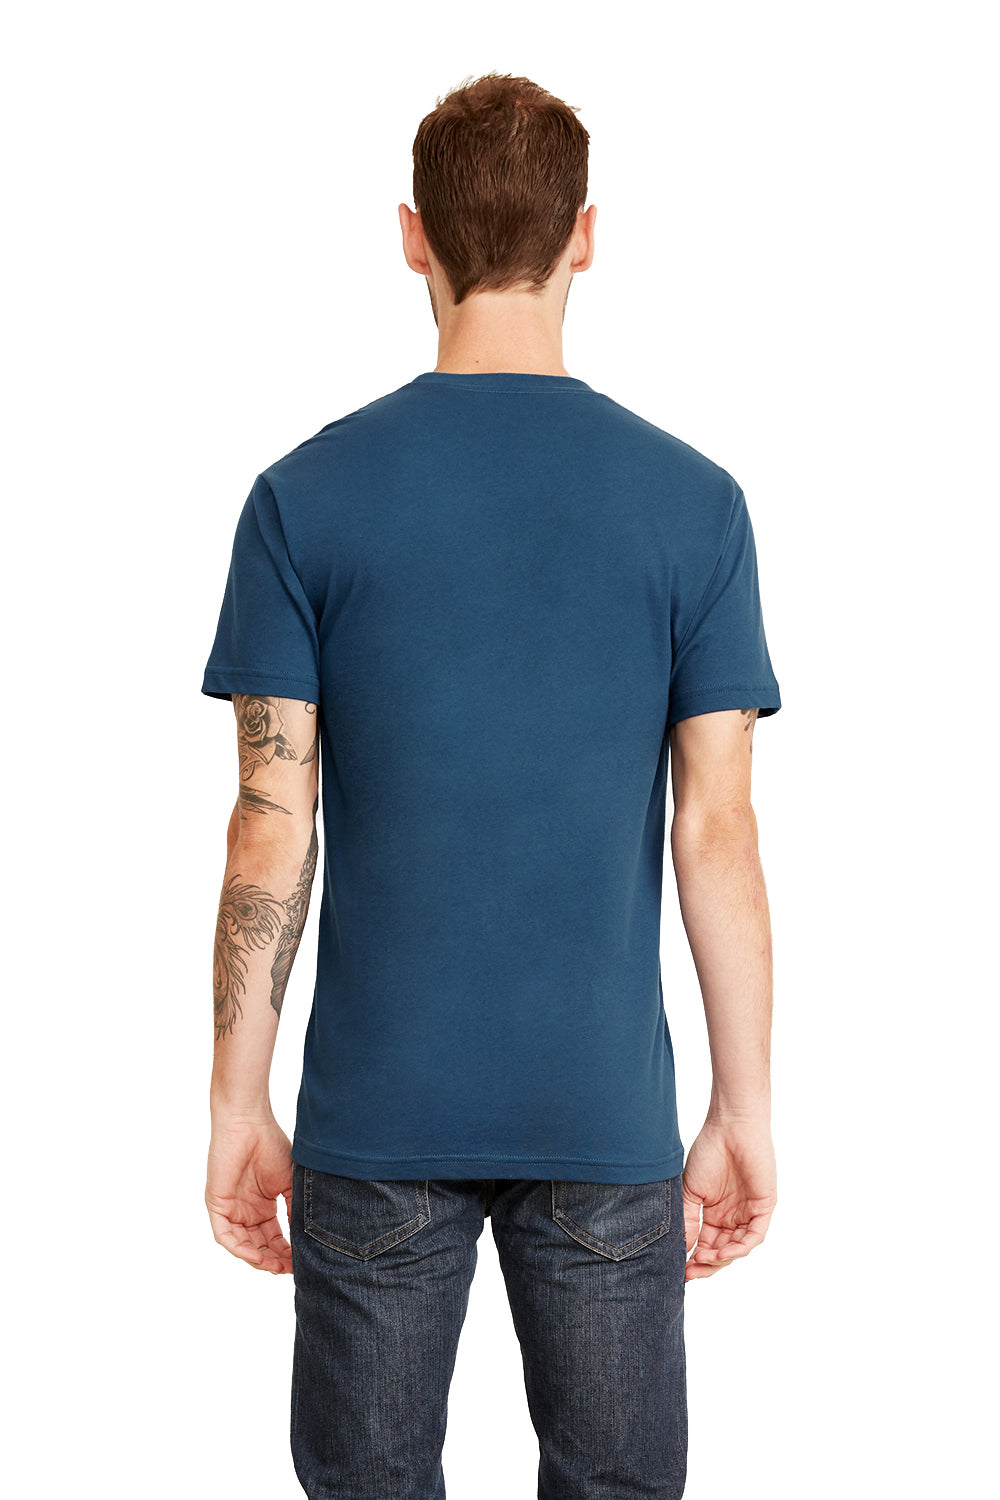 Next Level 3605 Mens Fine Jersey Short Sleeve Crewneck T-Shirt w/ Pocket Cool Blue Back